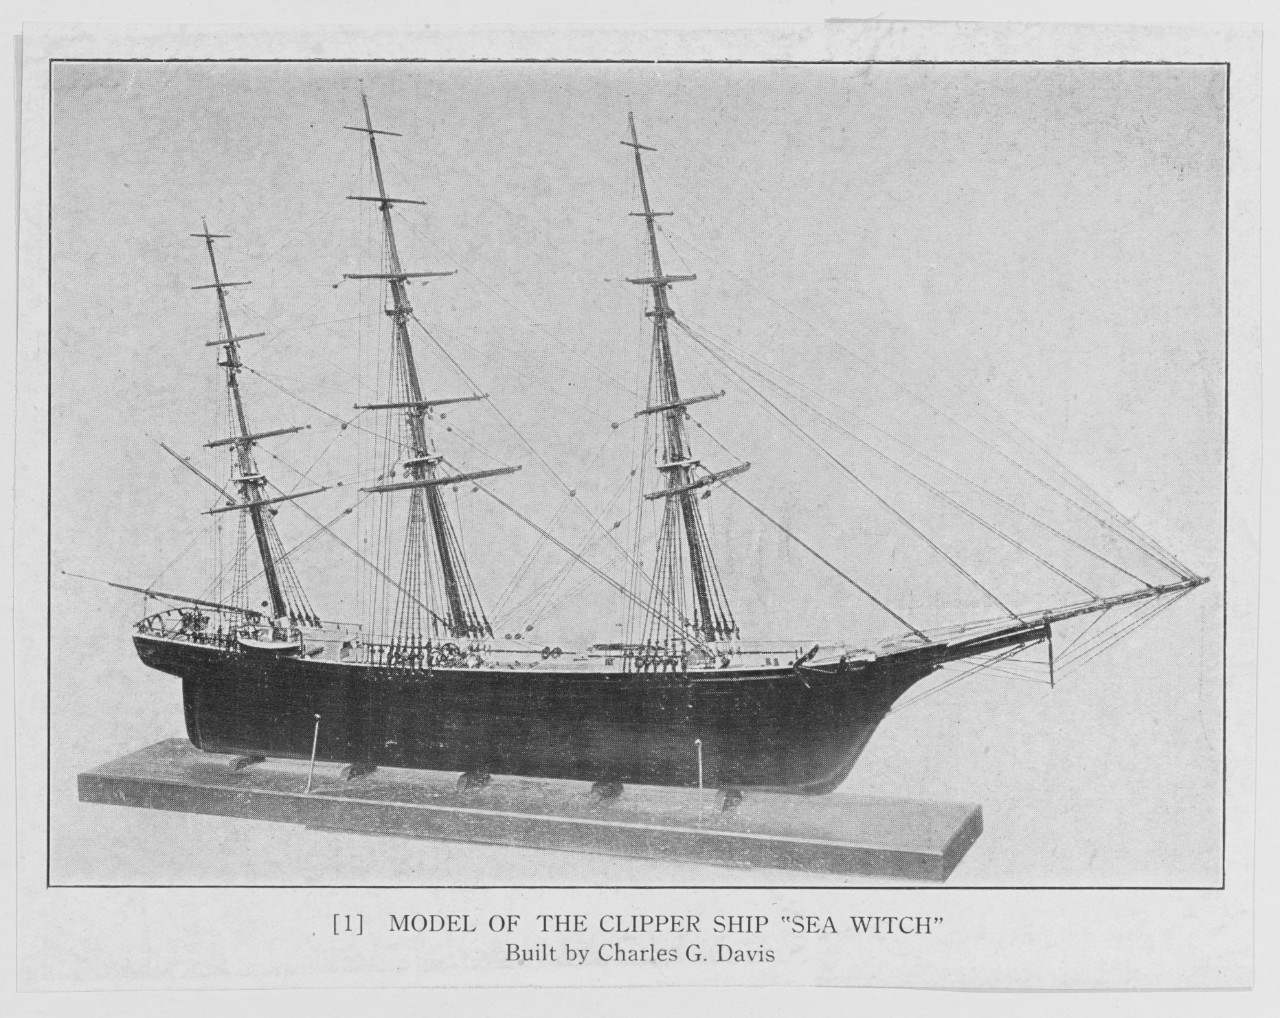 SEA WITCH (model of clipper ship)